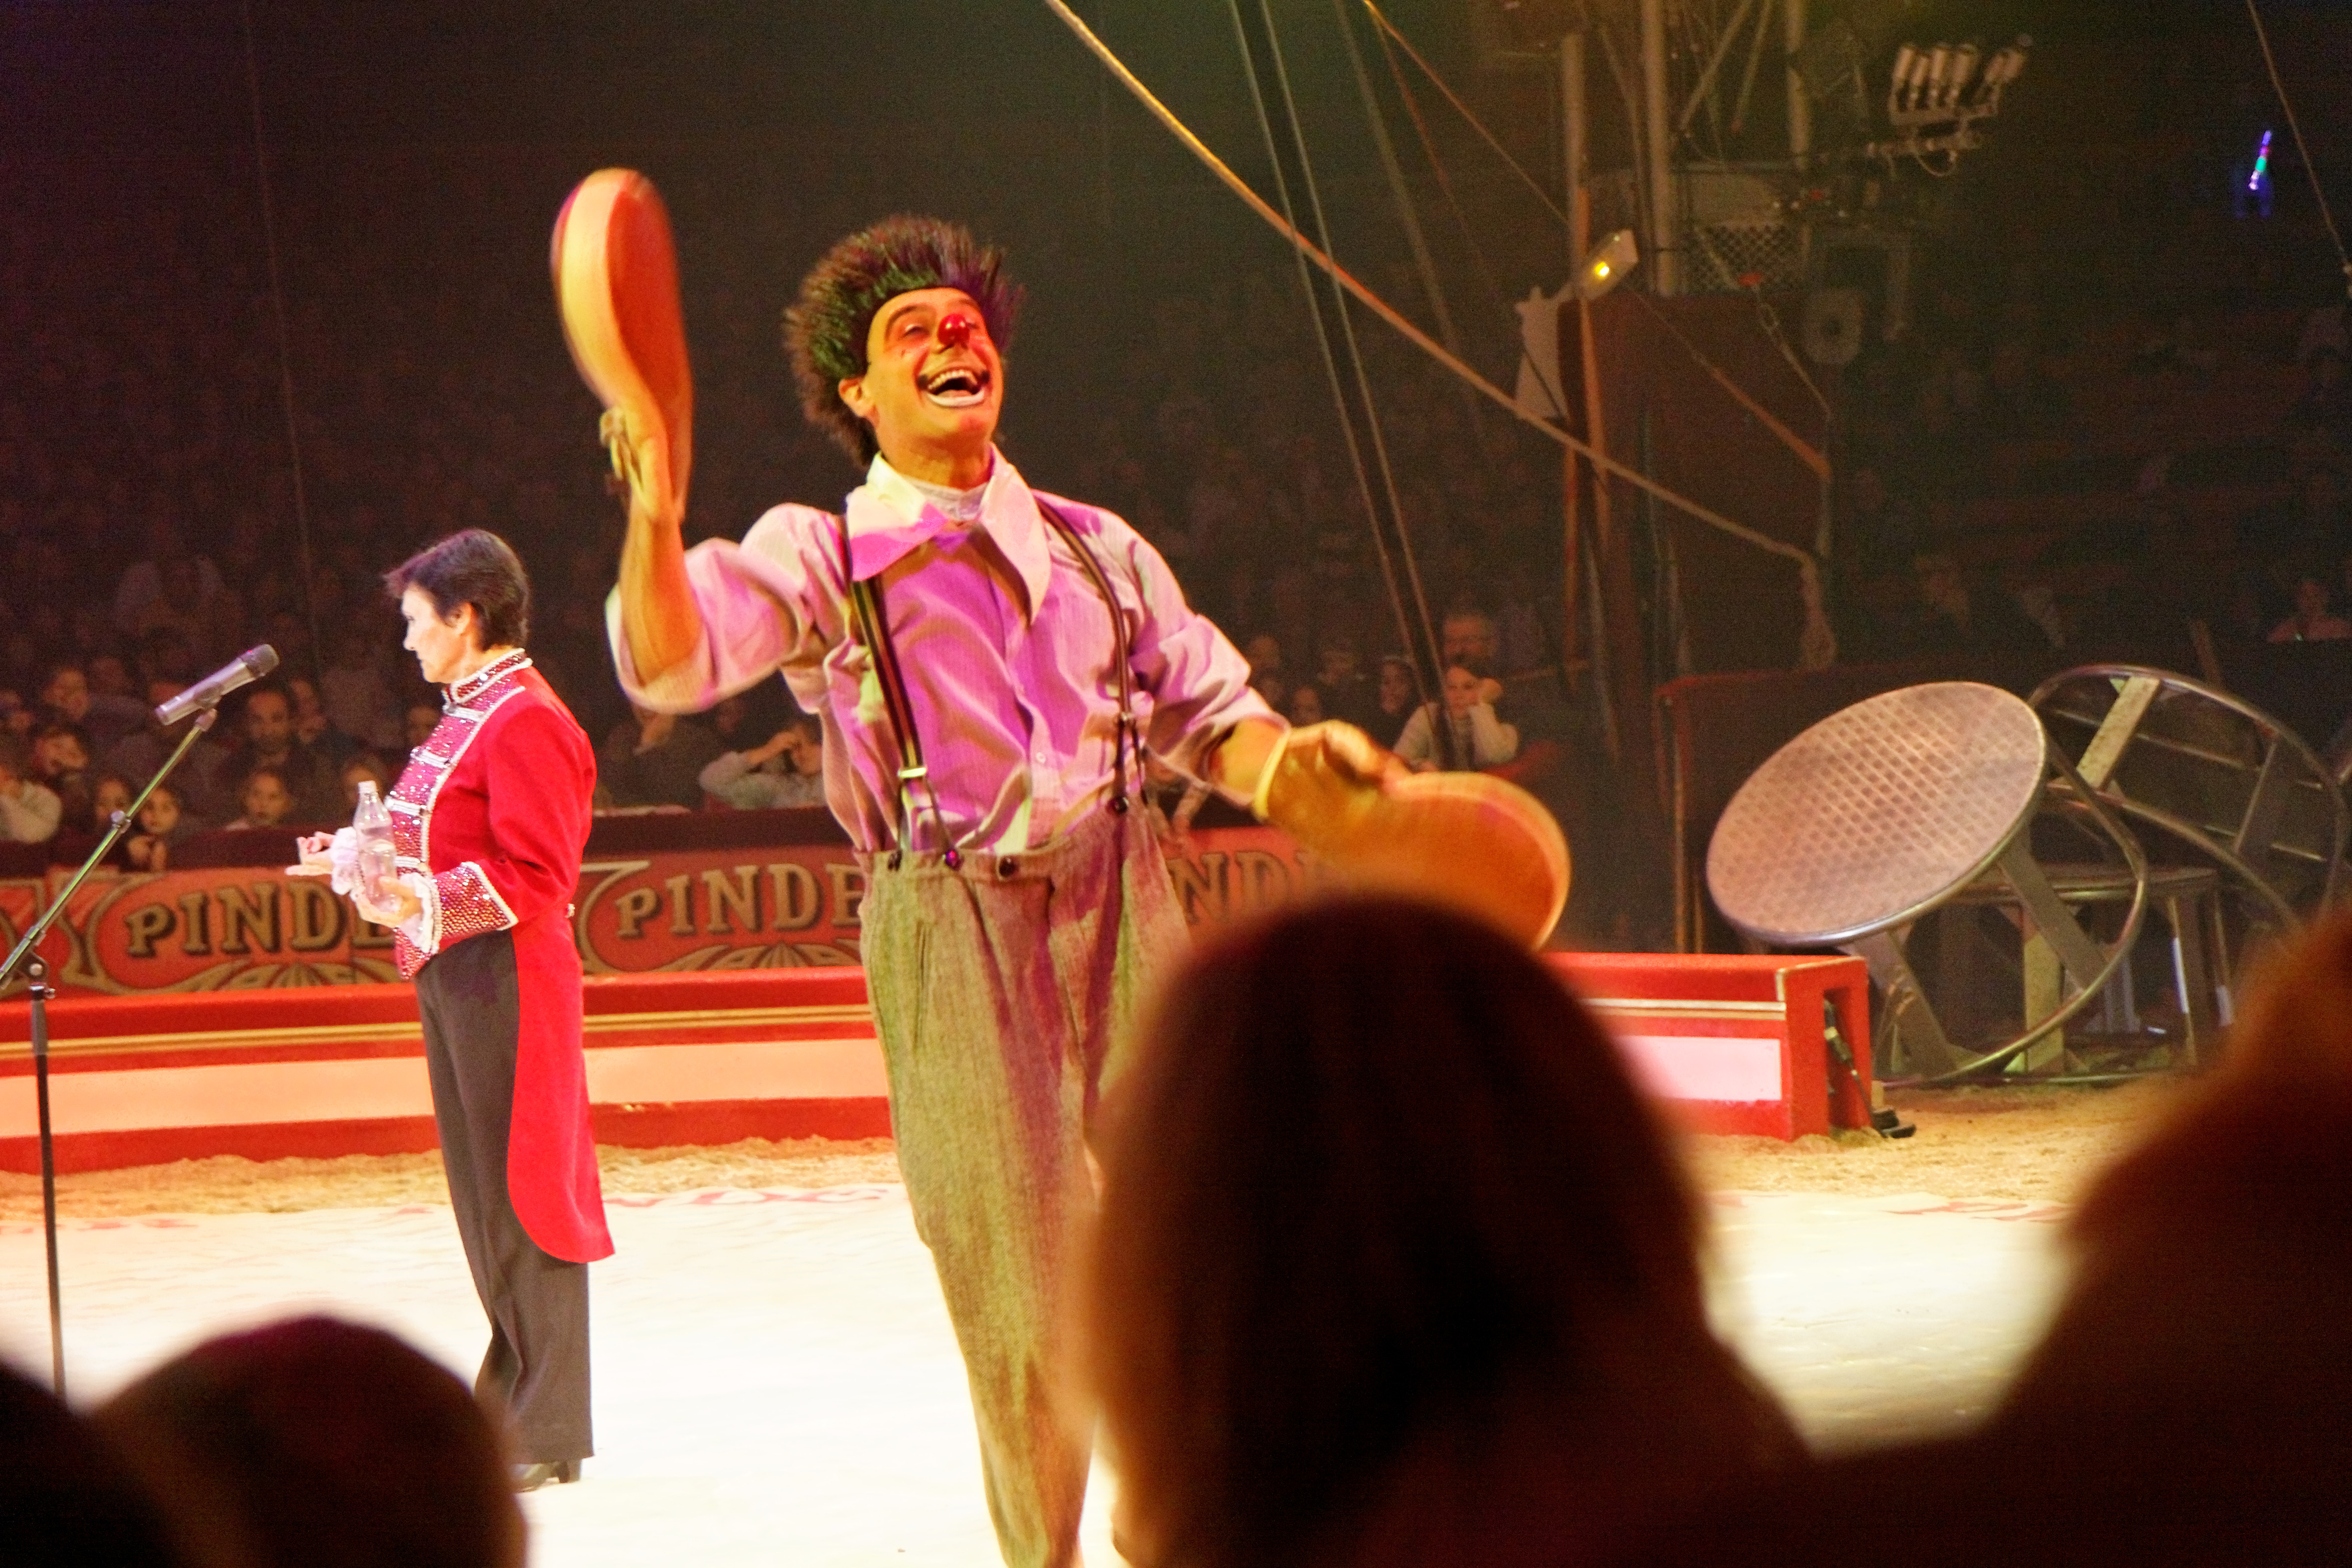 Цирк Pinder. Клоуны 12